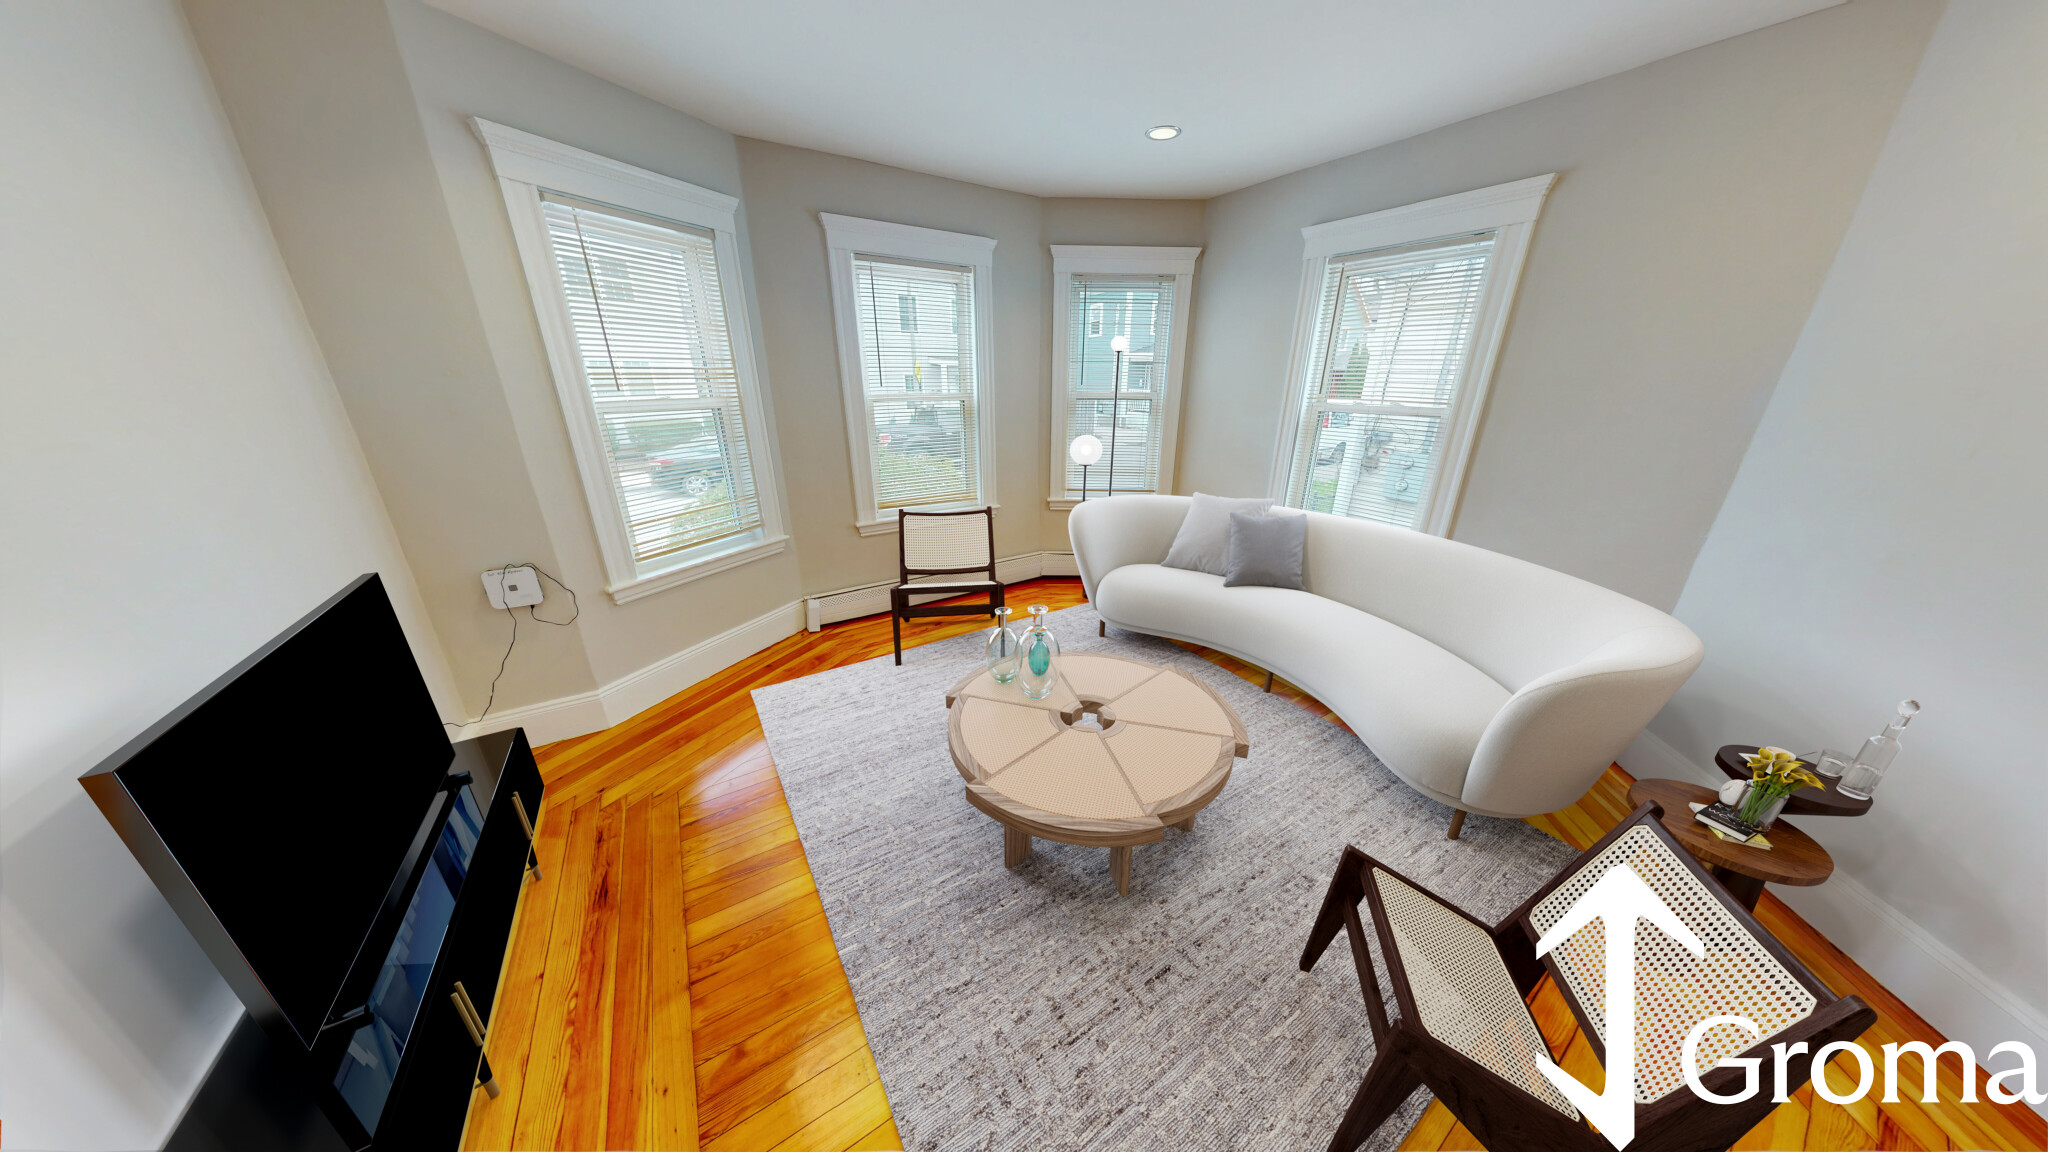 Photos of apartment on Spaulding St.,Boston MA 02122